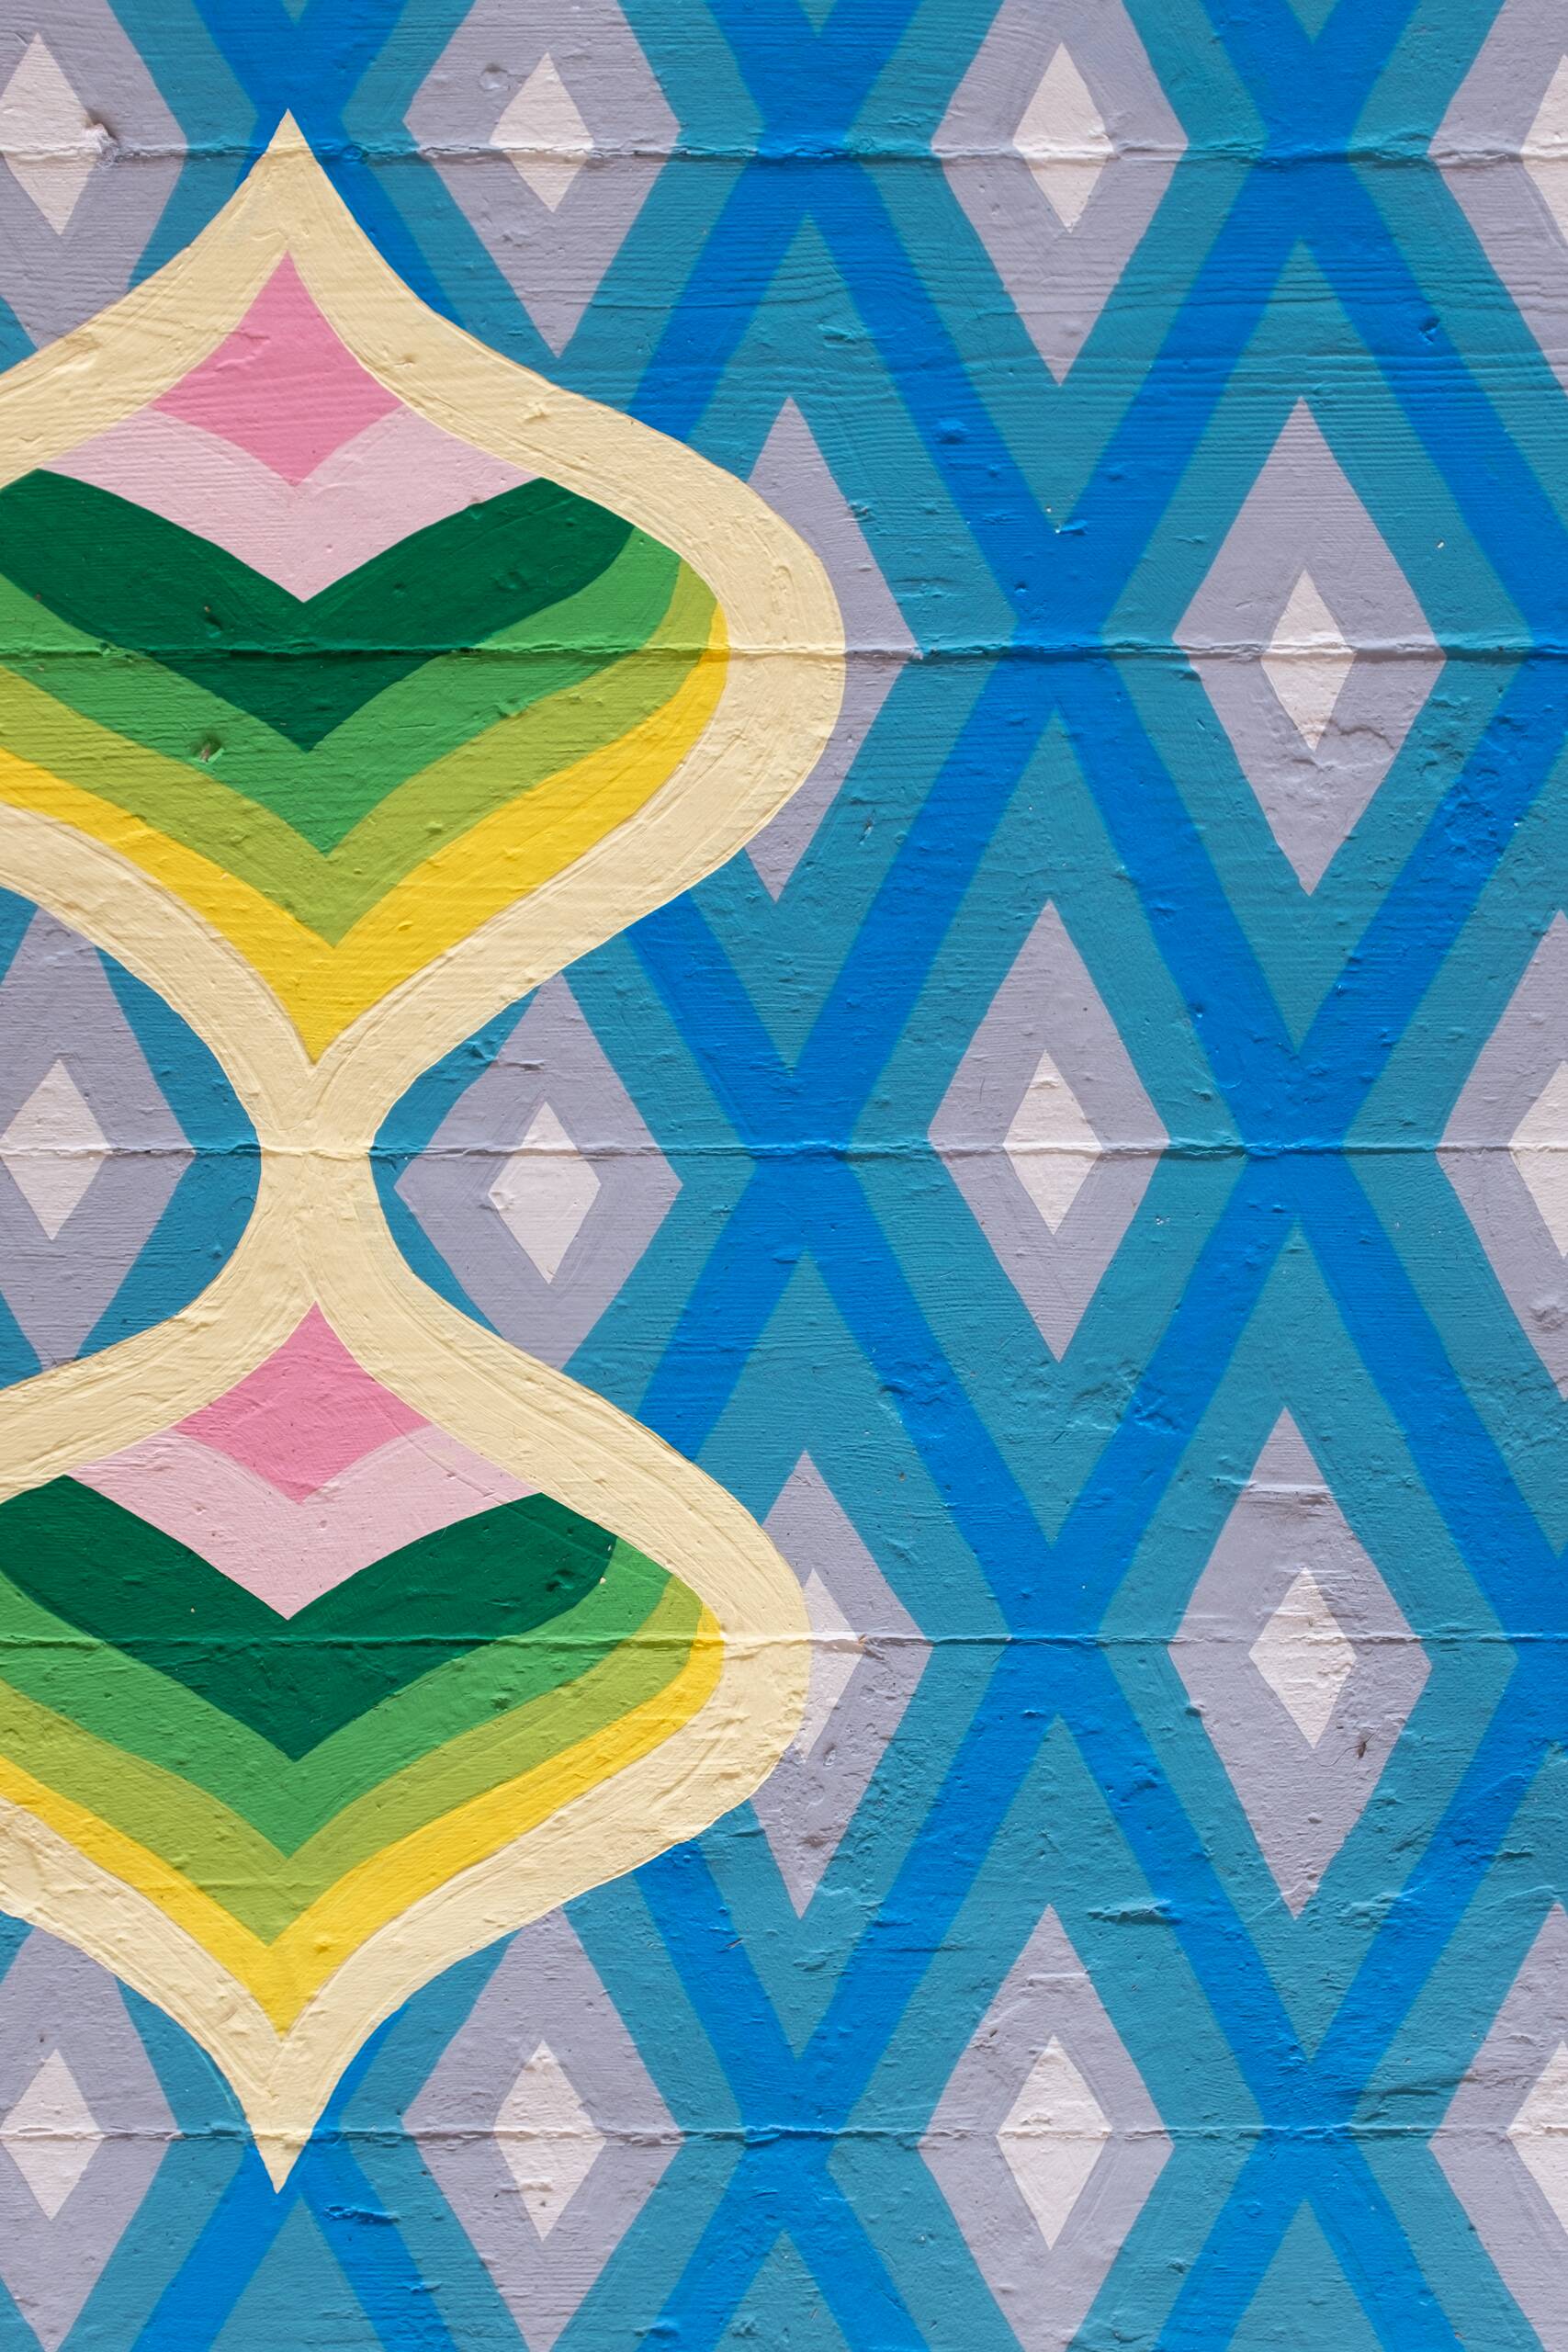 Bargello floor painting [green hearts and blue diamonds], House paint on floor, 2020